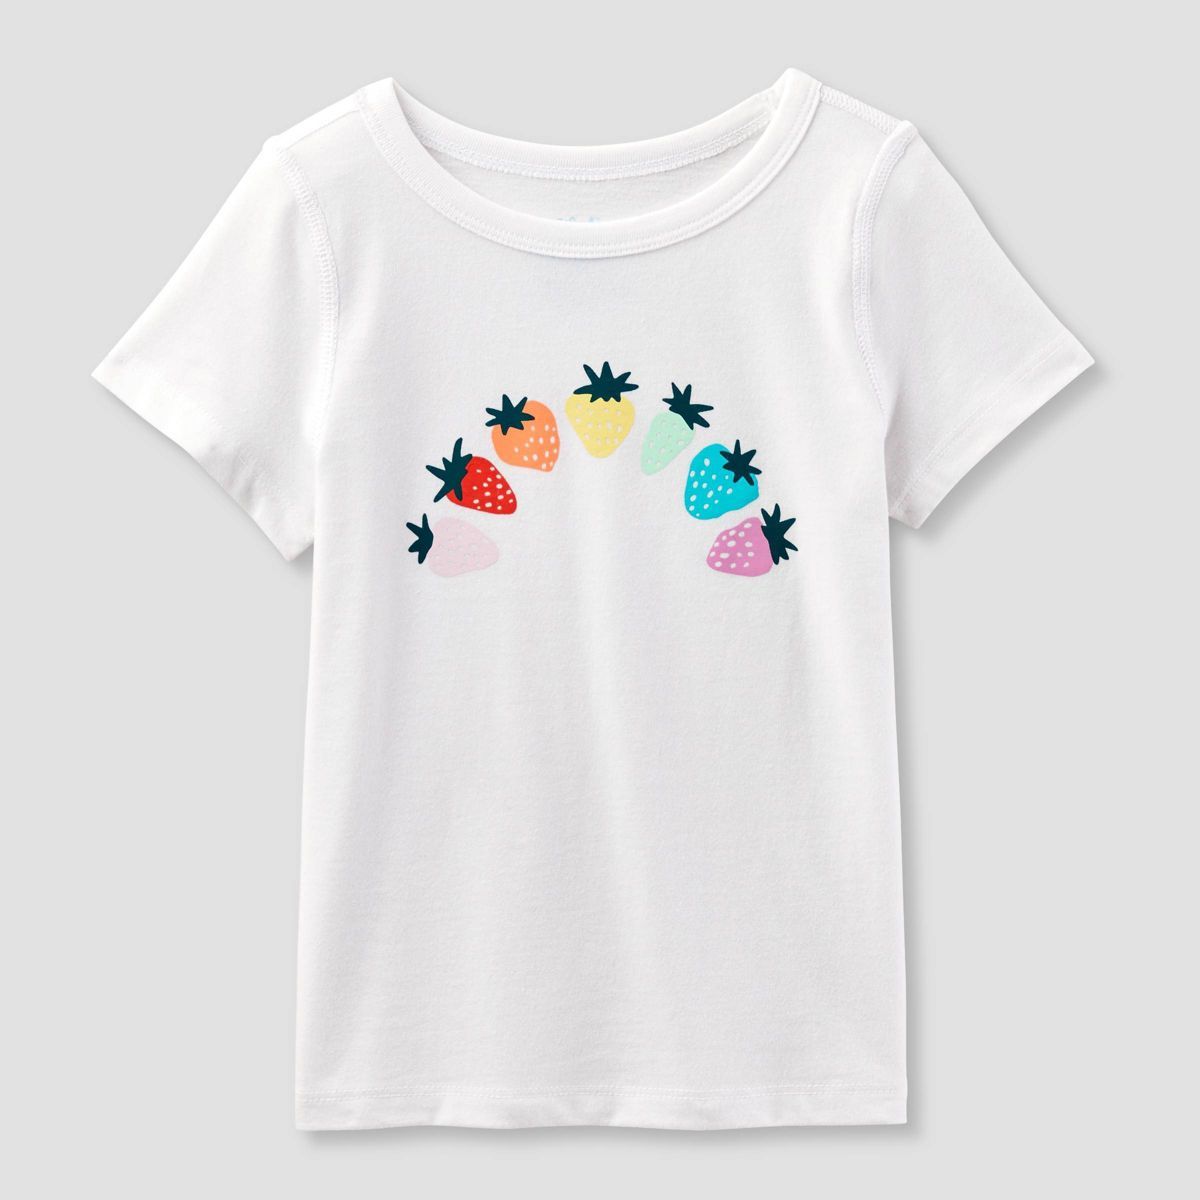 Toddler Adaptive 'Strawberry Rainbow' Short Sleeve Graphic T-Shirt - Cat & Jack™ White 4T | Target